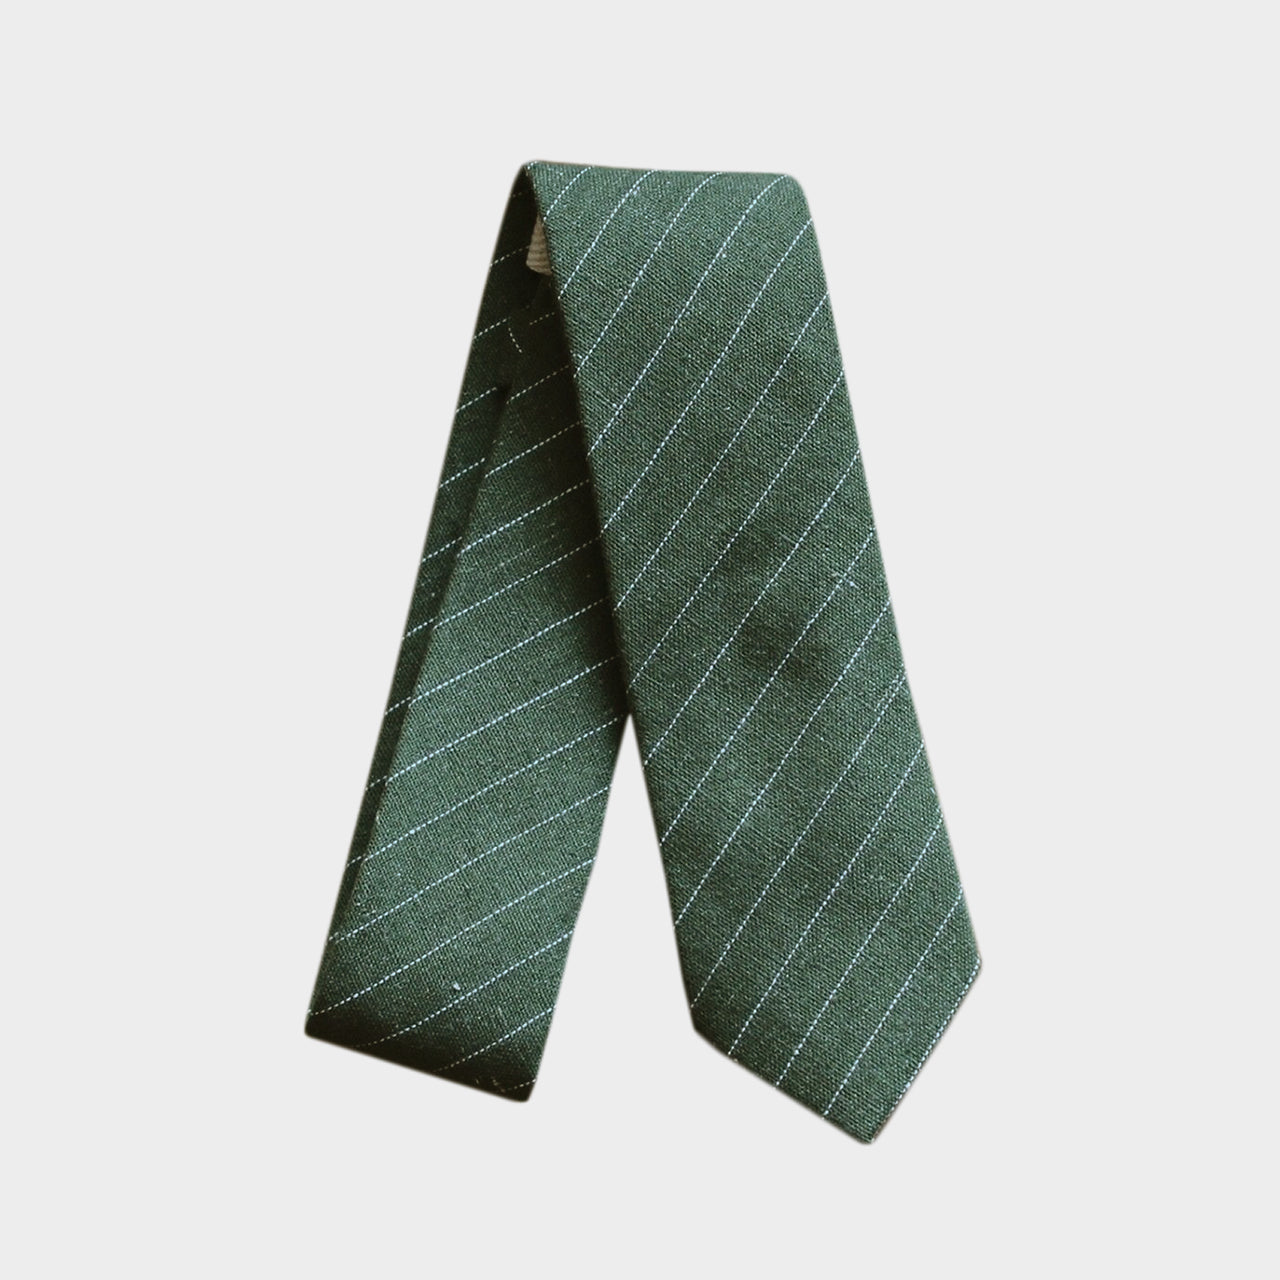 BAYLOR - Men's Tie